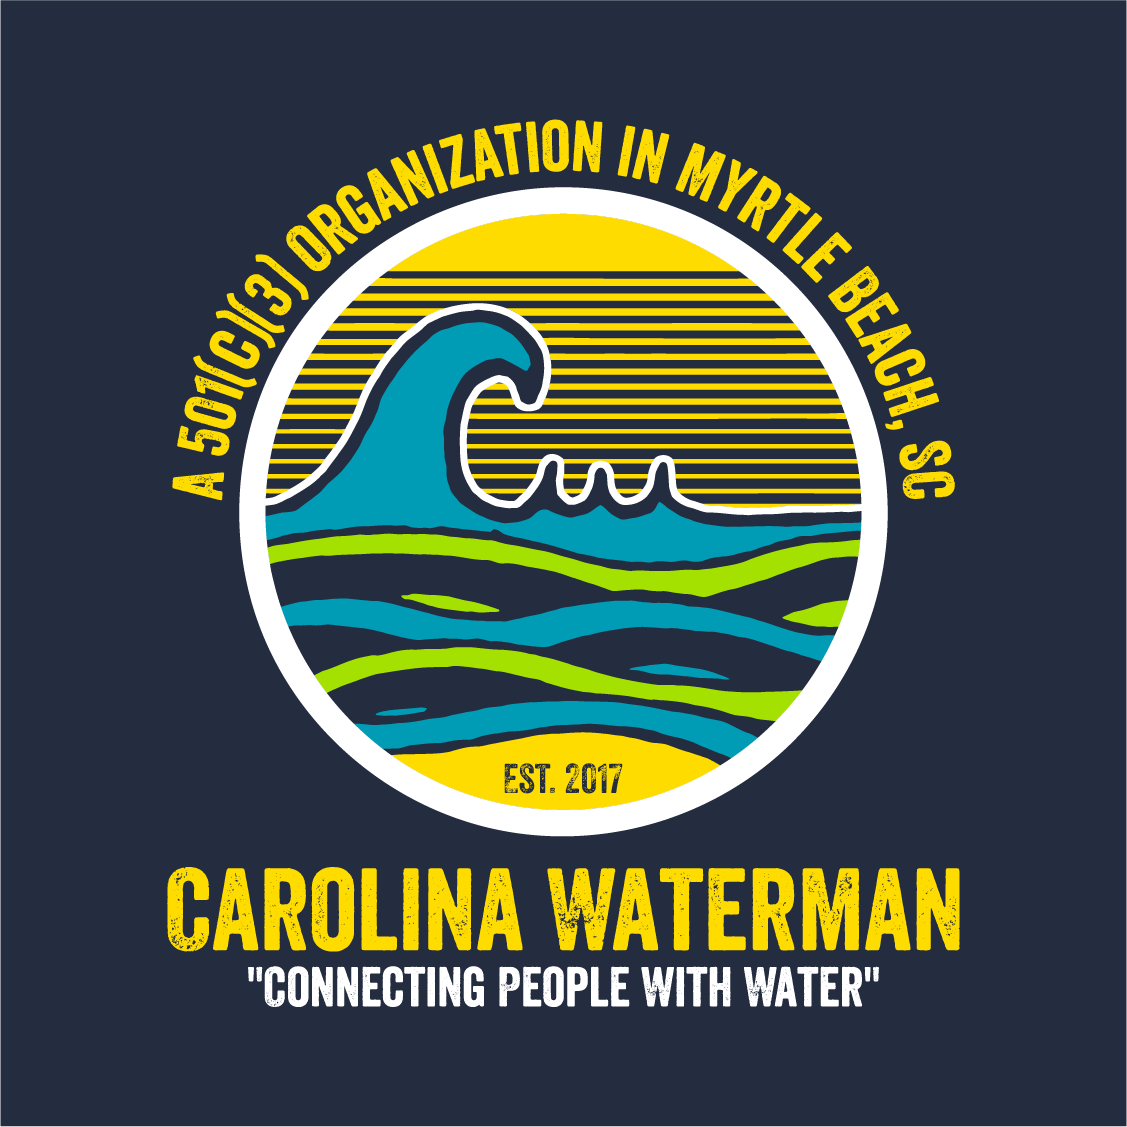 The Carolina Waterman Organization Is Now A 501(c)(3) Tax Exempt Organization! Help Us Celebrate!?! shirt design - zoomed